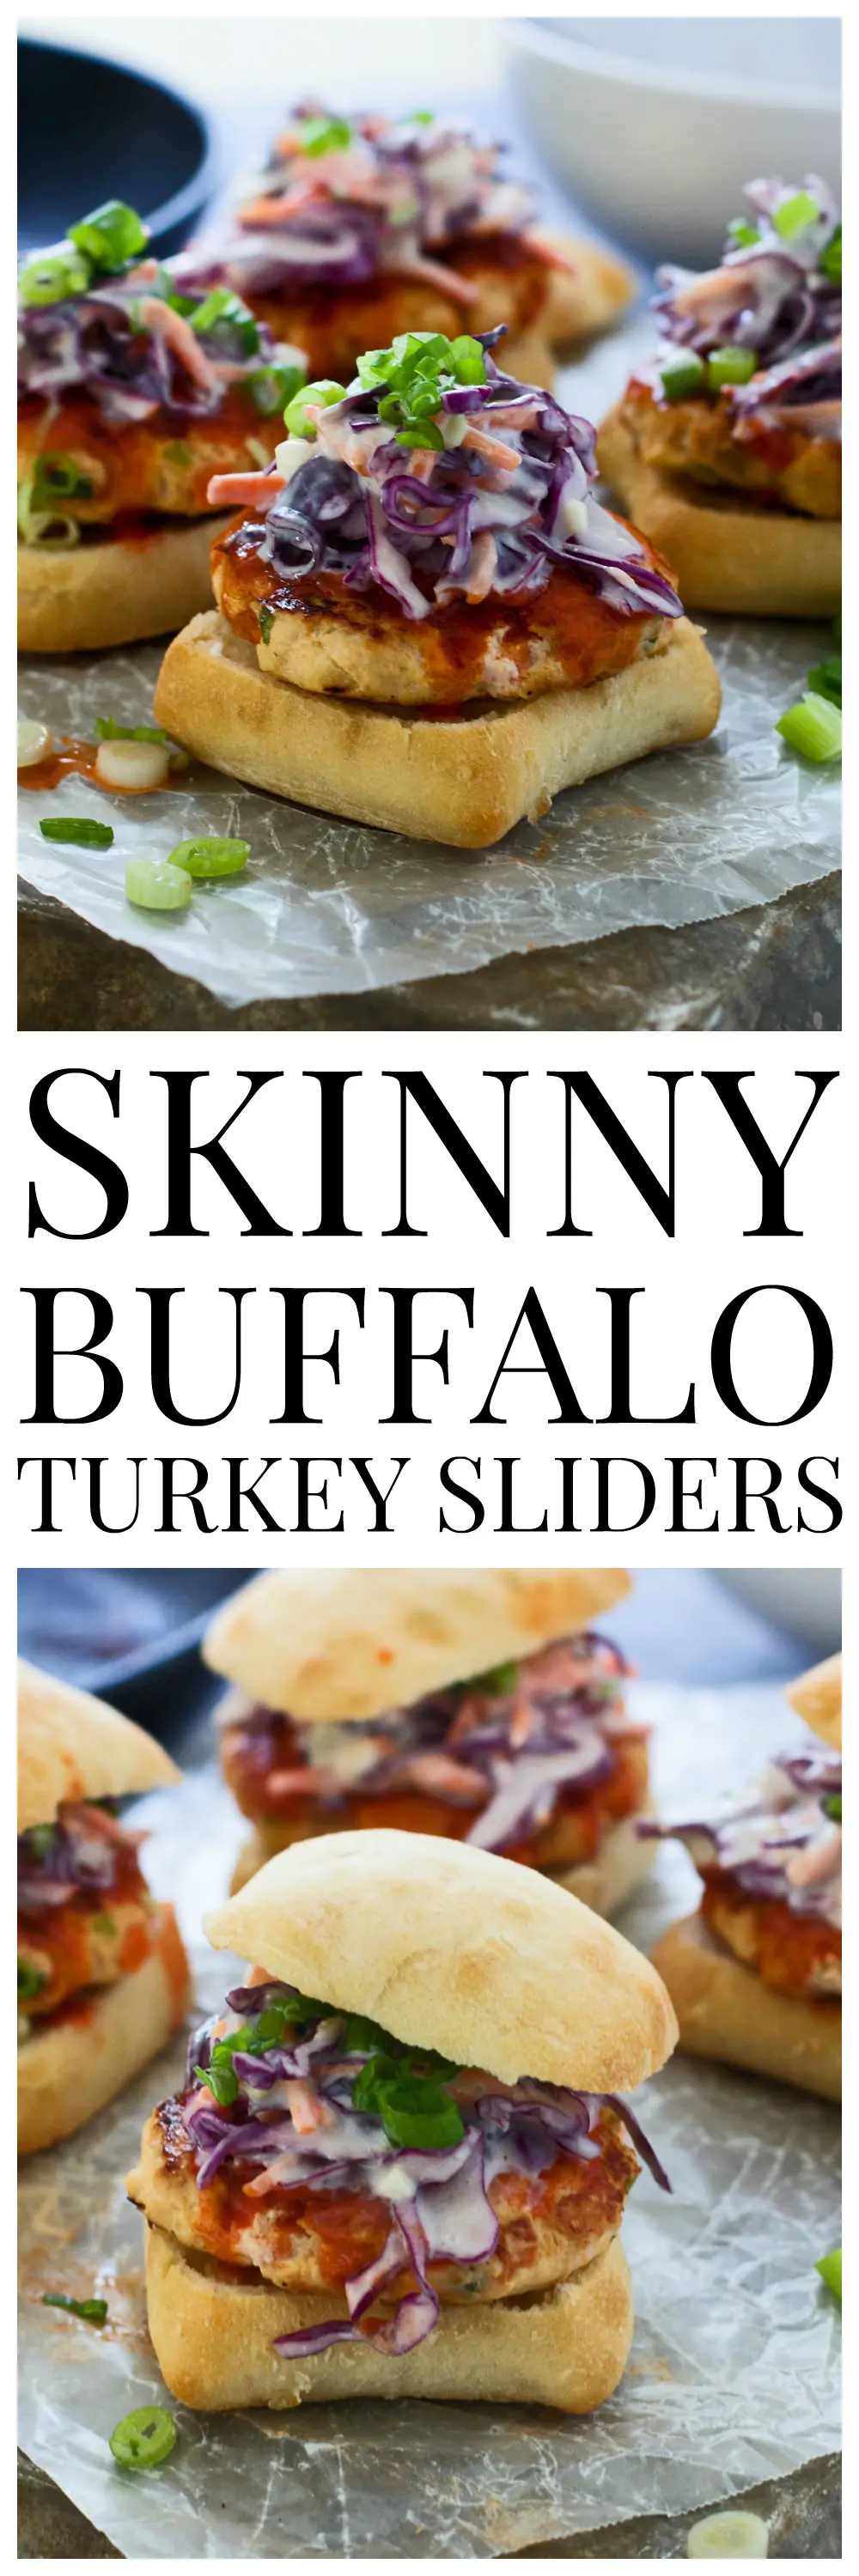 Skinny Buffalo Turkey Sliders - So much flavor, and super healthy!